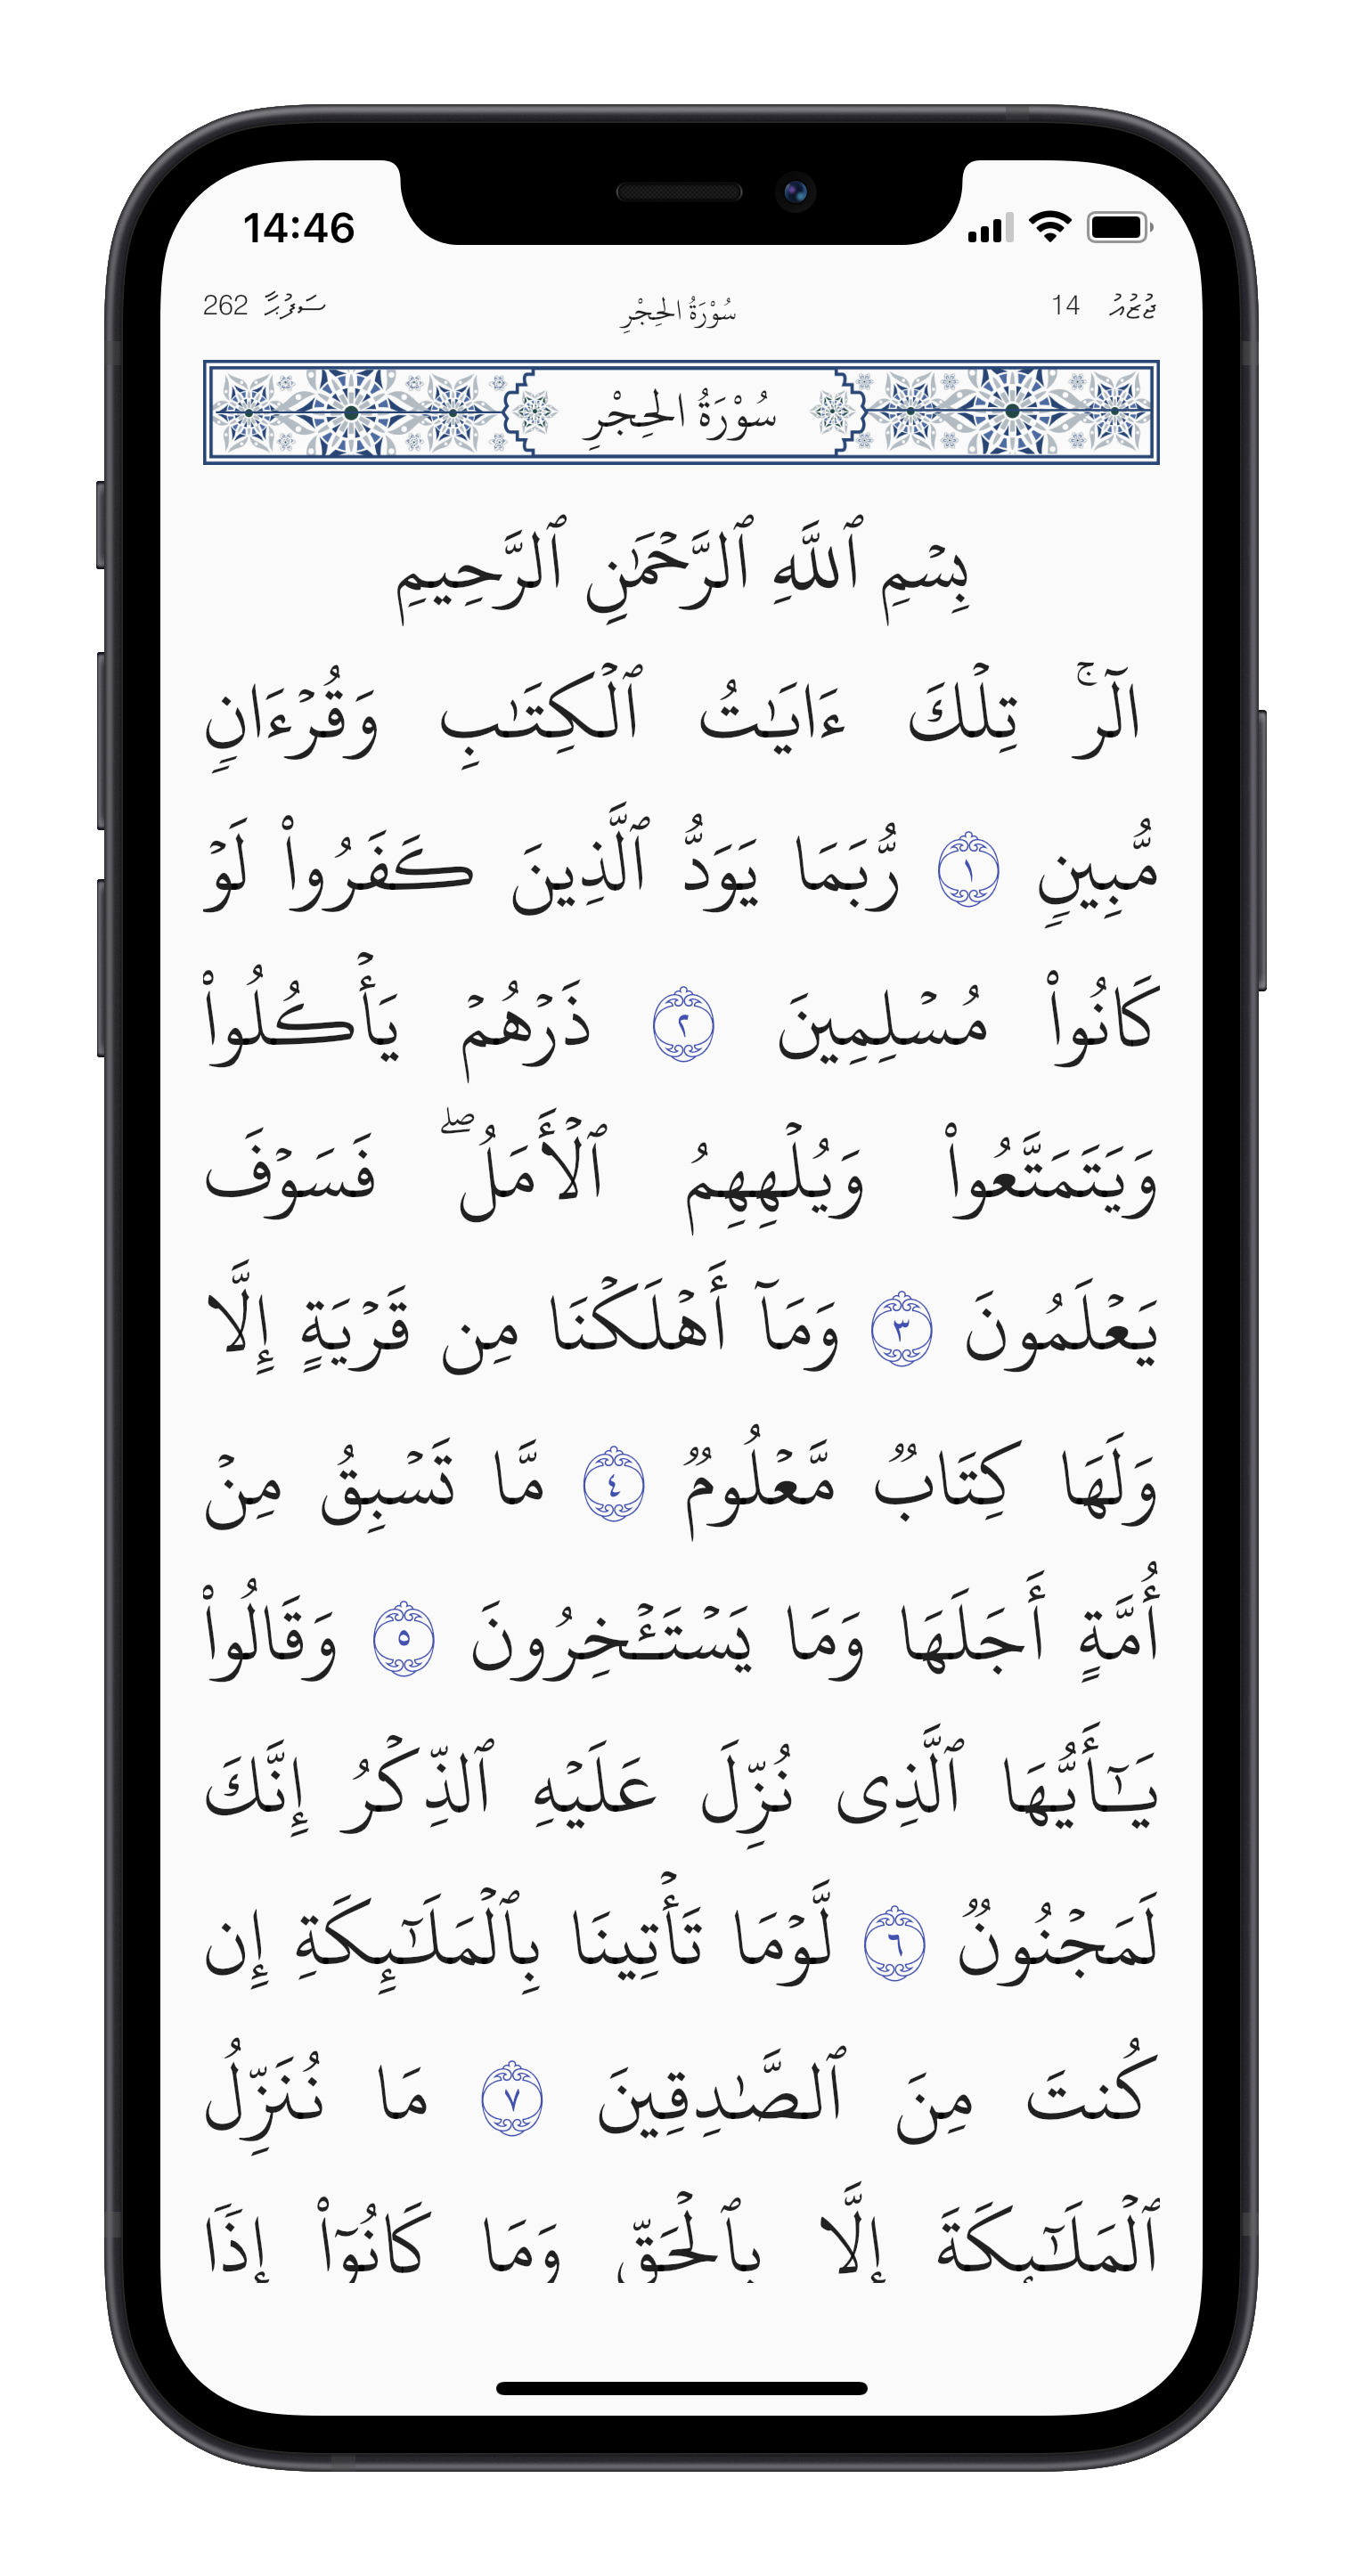 Image with QuranMV app screenshot